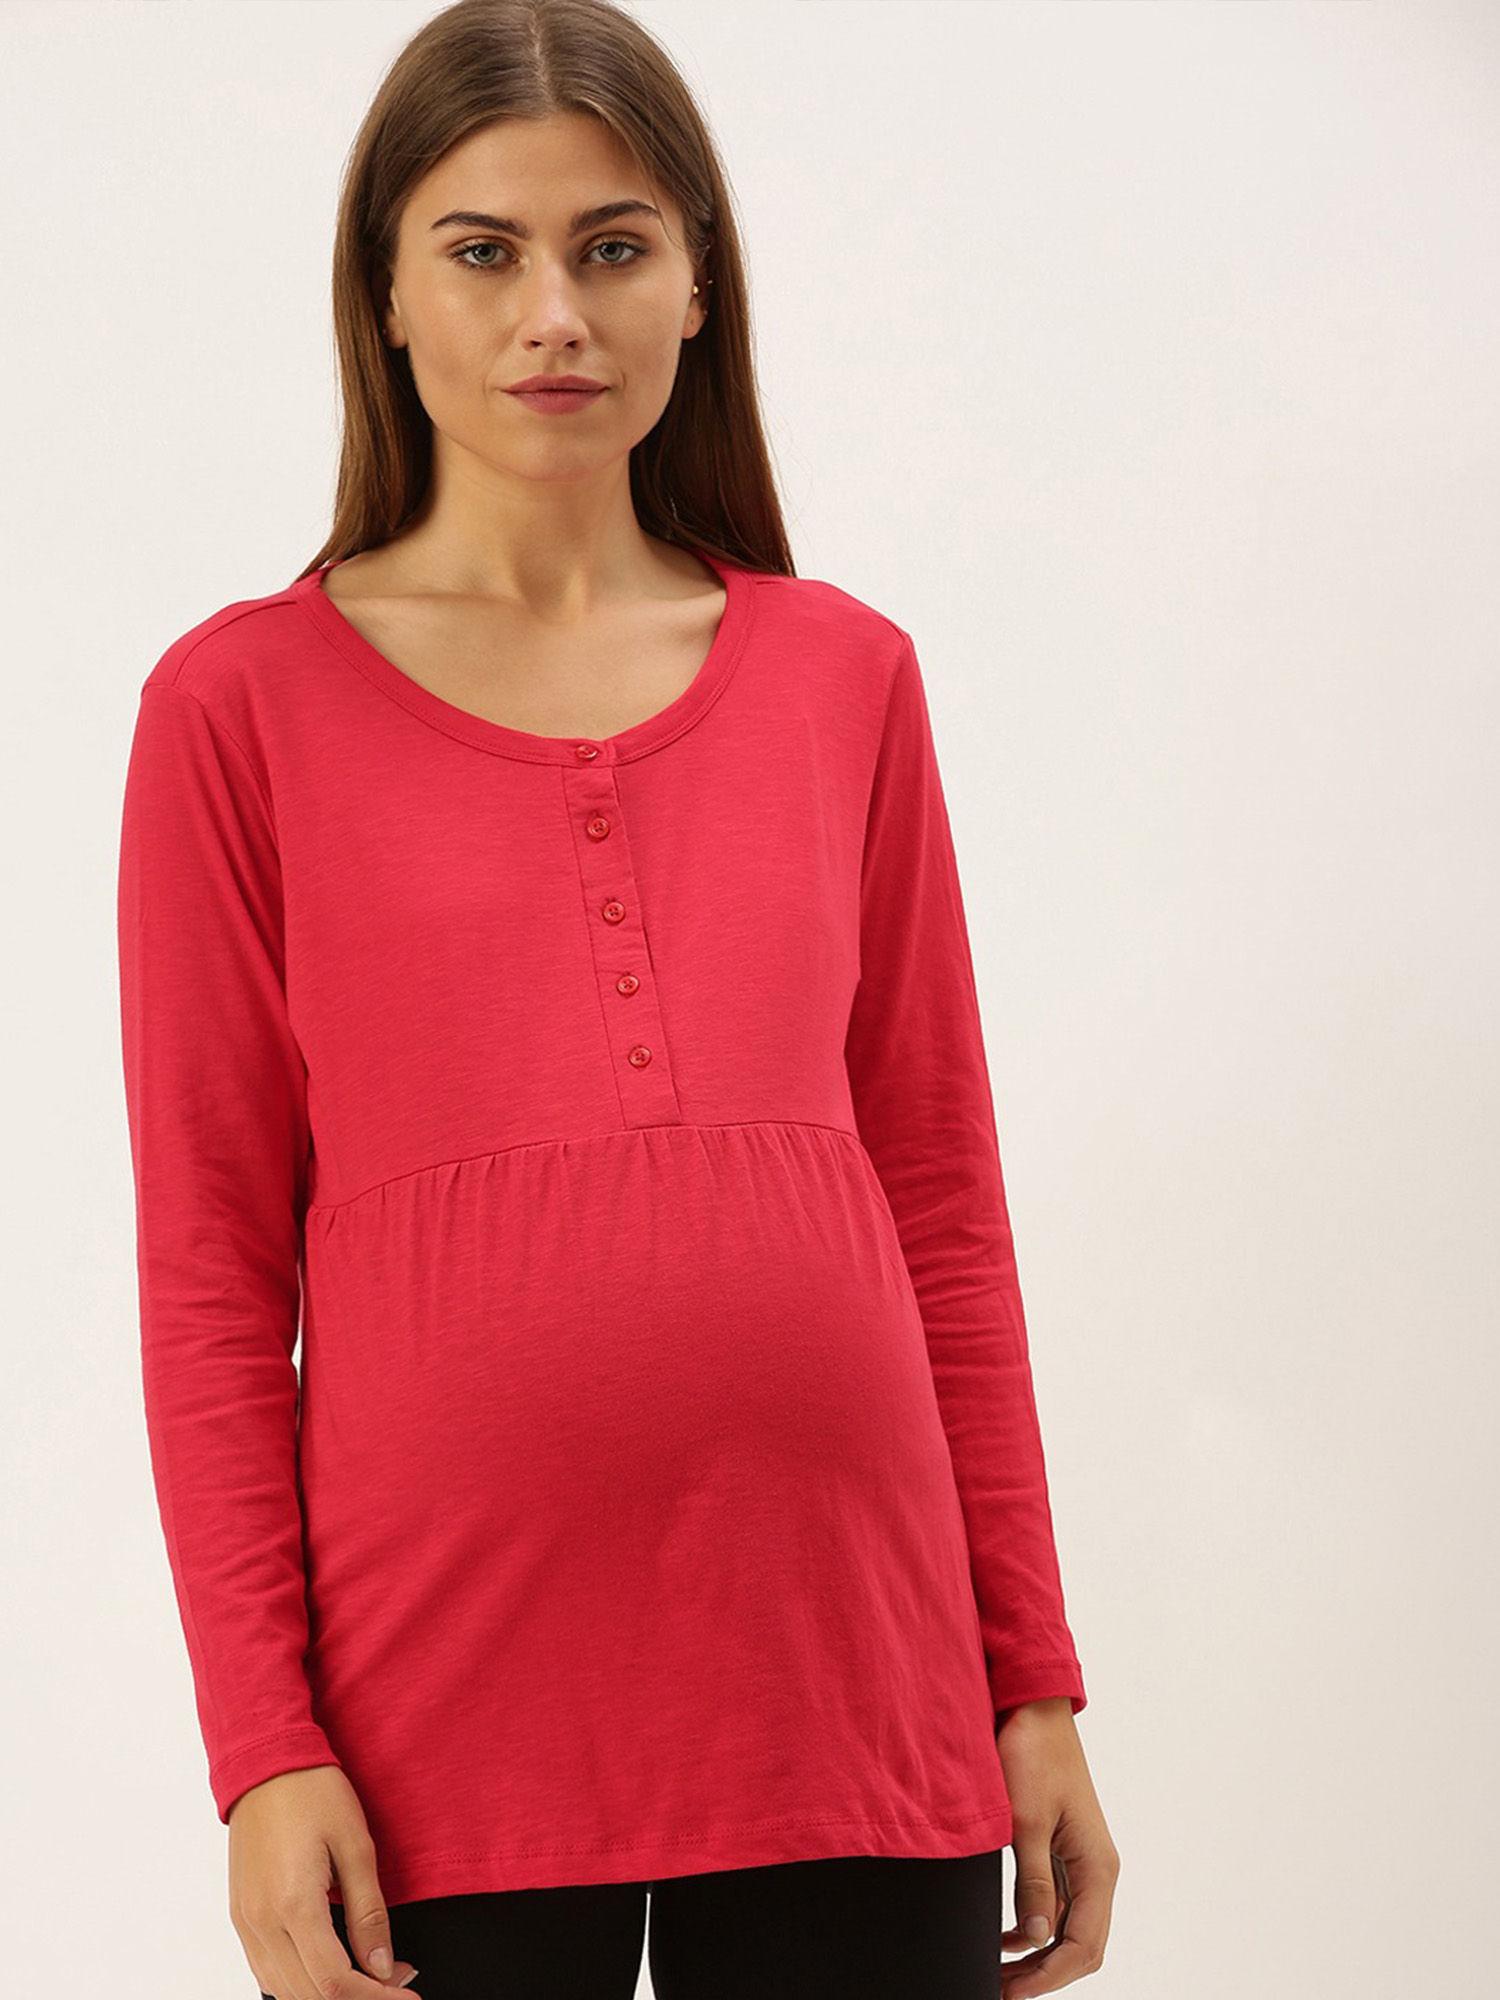 feeding/nursing maternity sleep top - red